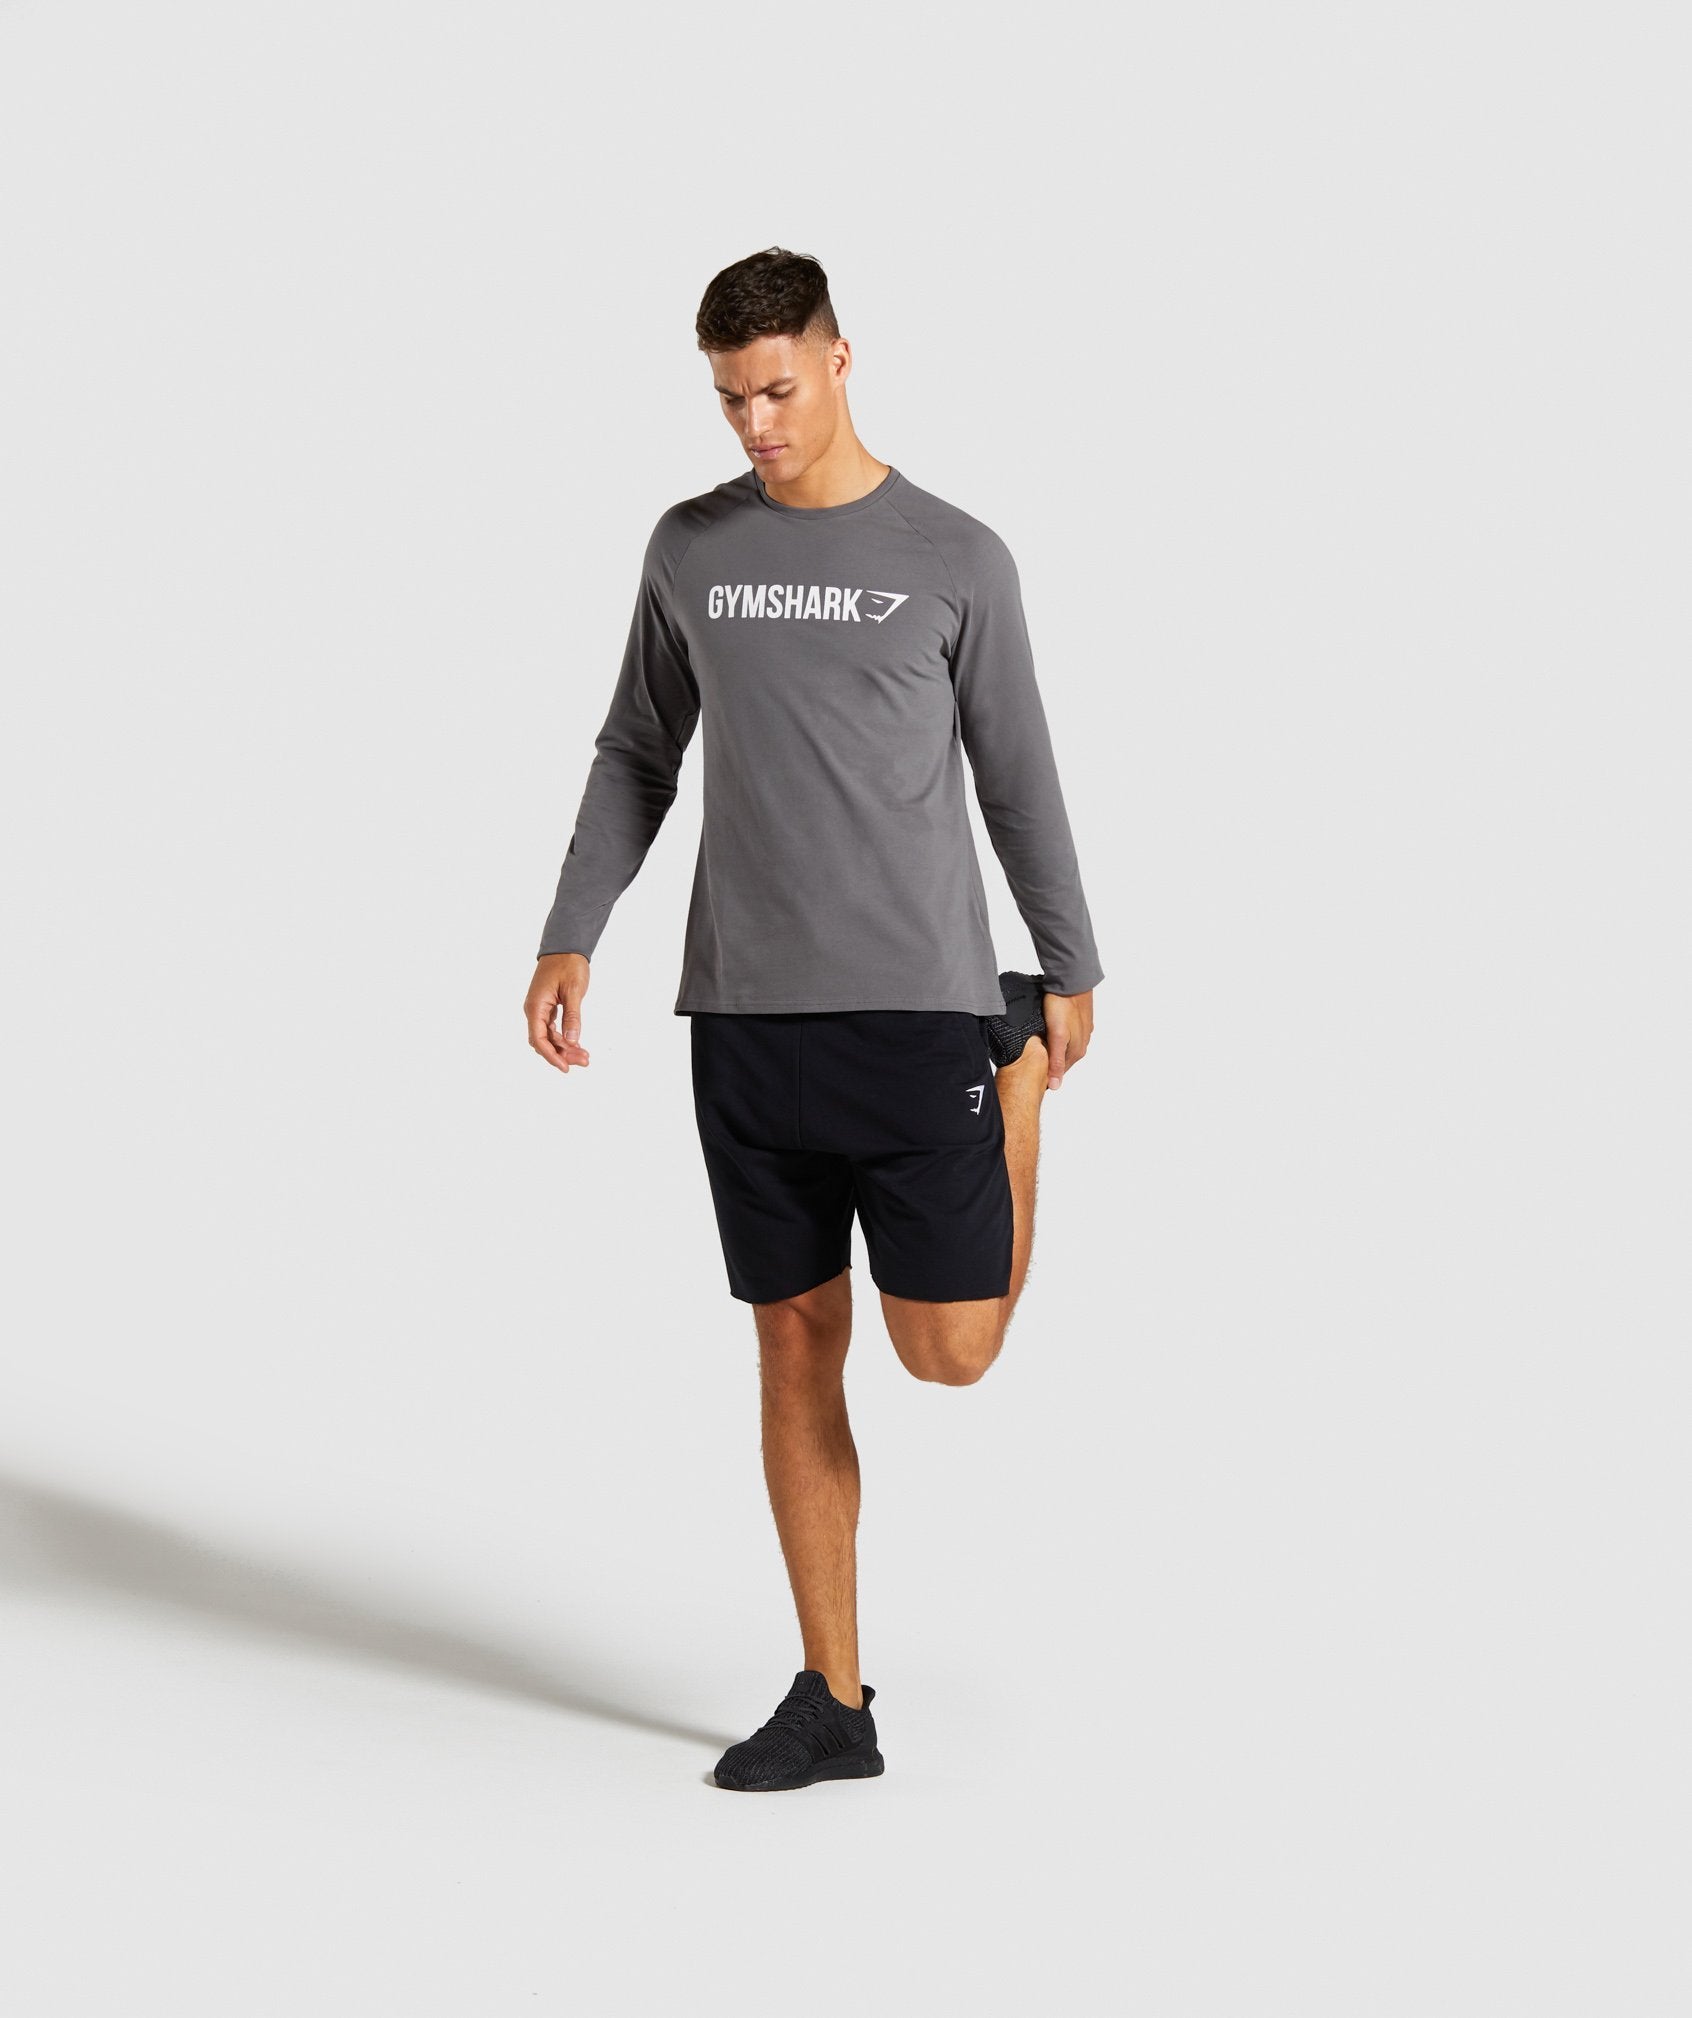 Apollo Long Sleeve T-Shirt in Grey